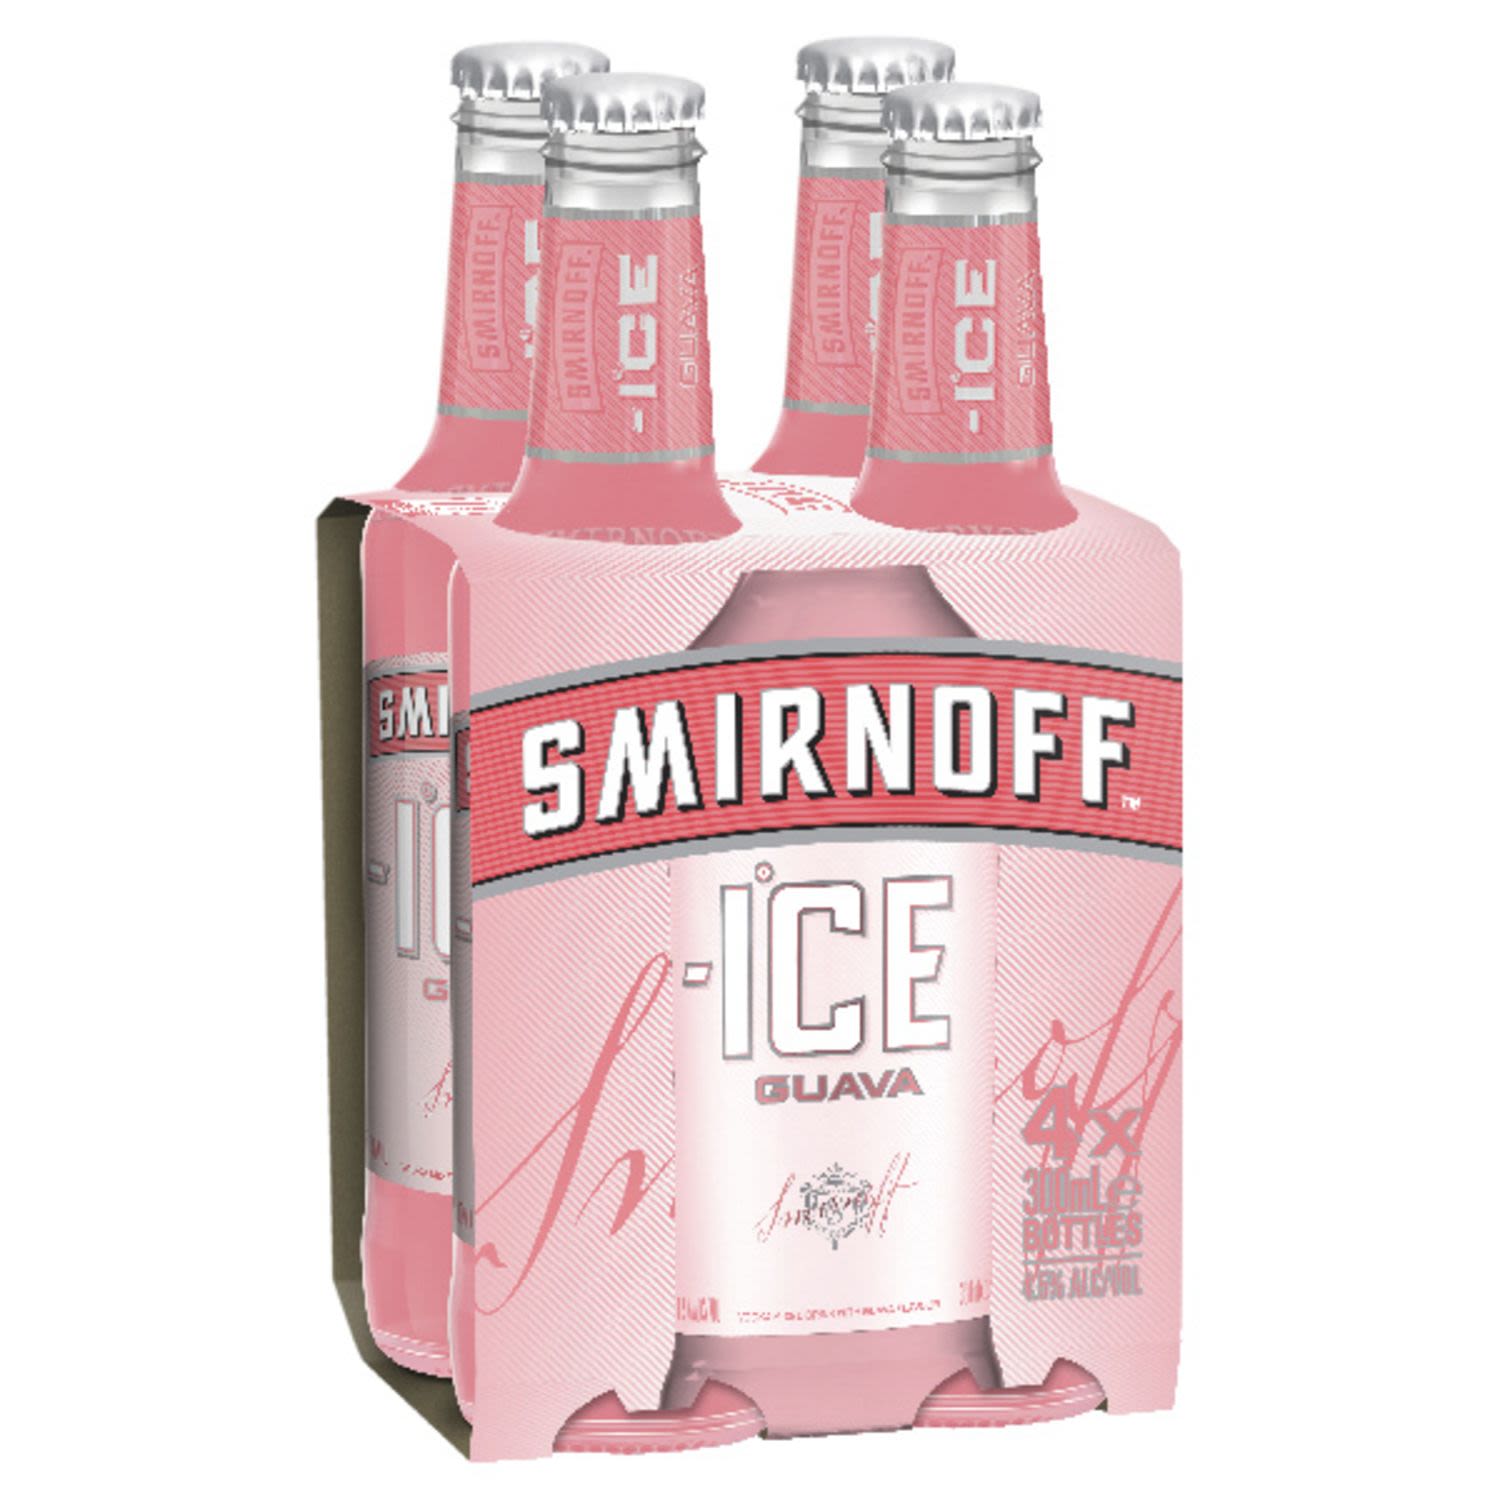 Smirnoff Ice Guava Bottle 300mL 4 Pack